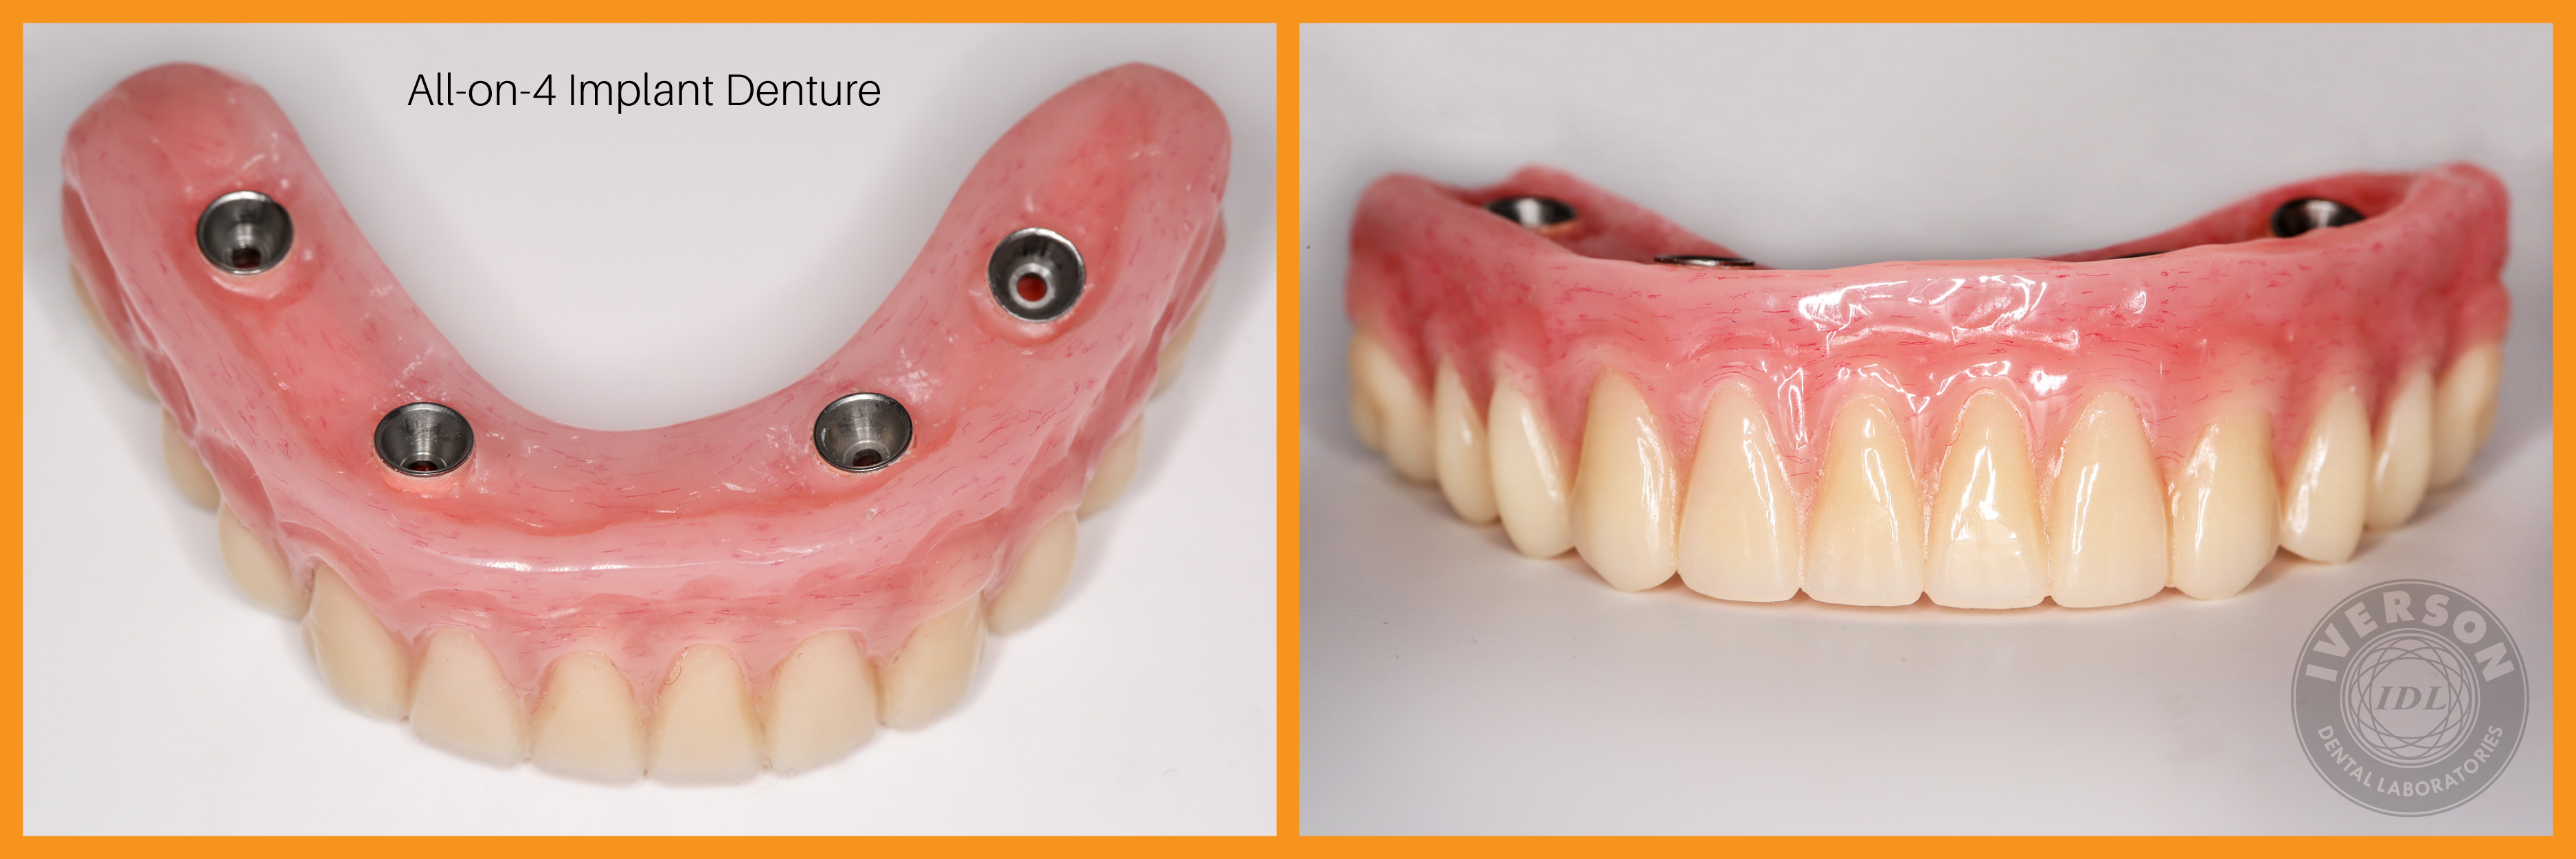 Metal-free trinia allows for lightweight implant dentures